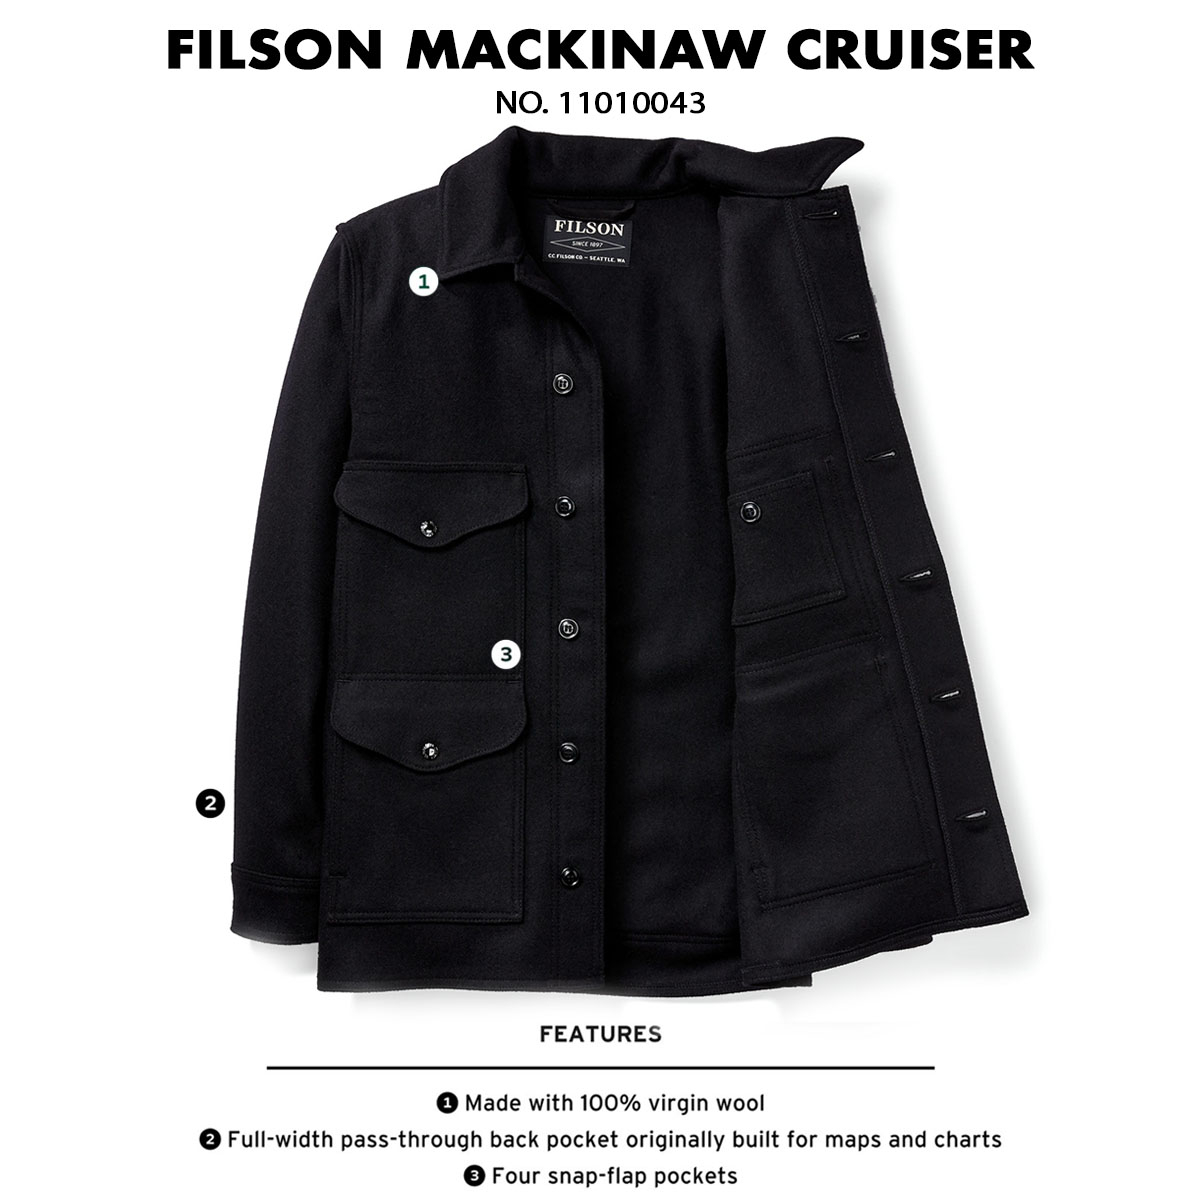 Filson Mackinaw Cruiser Dark Navy 11010043, features